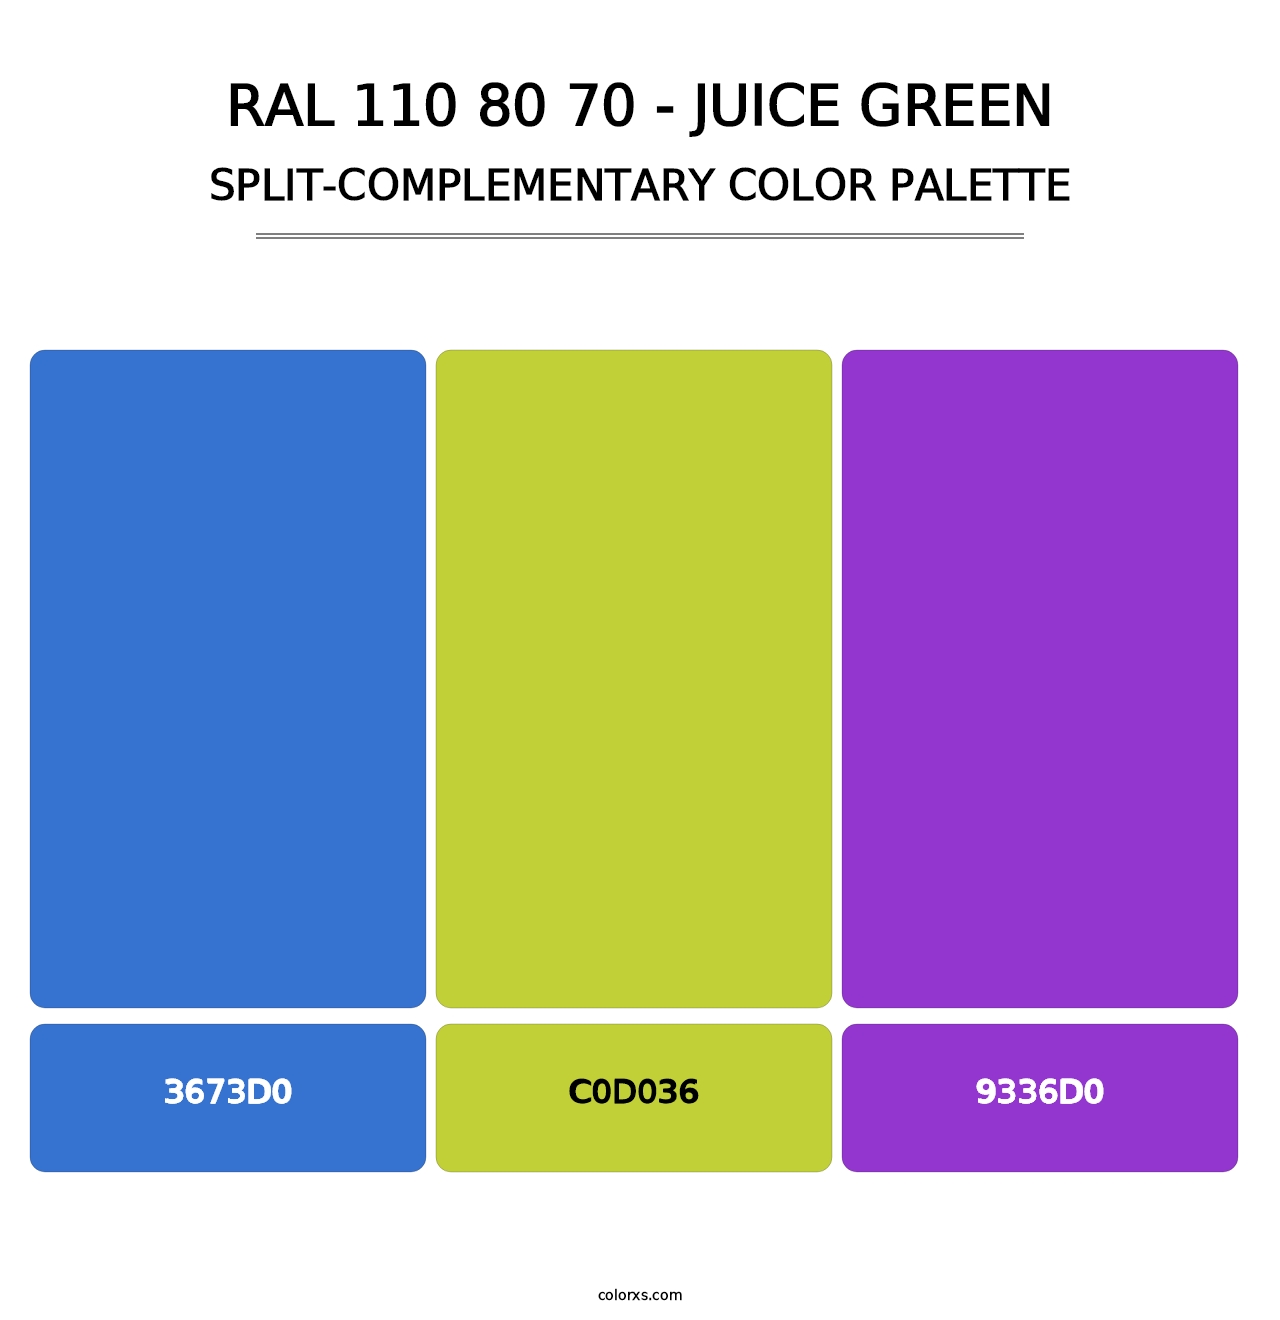 RAL 110 80 70 - Juice Green - Split-Complementary Color Palette